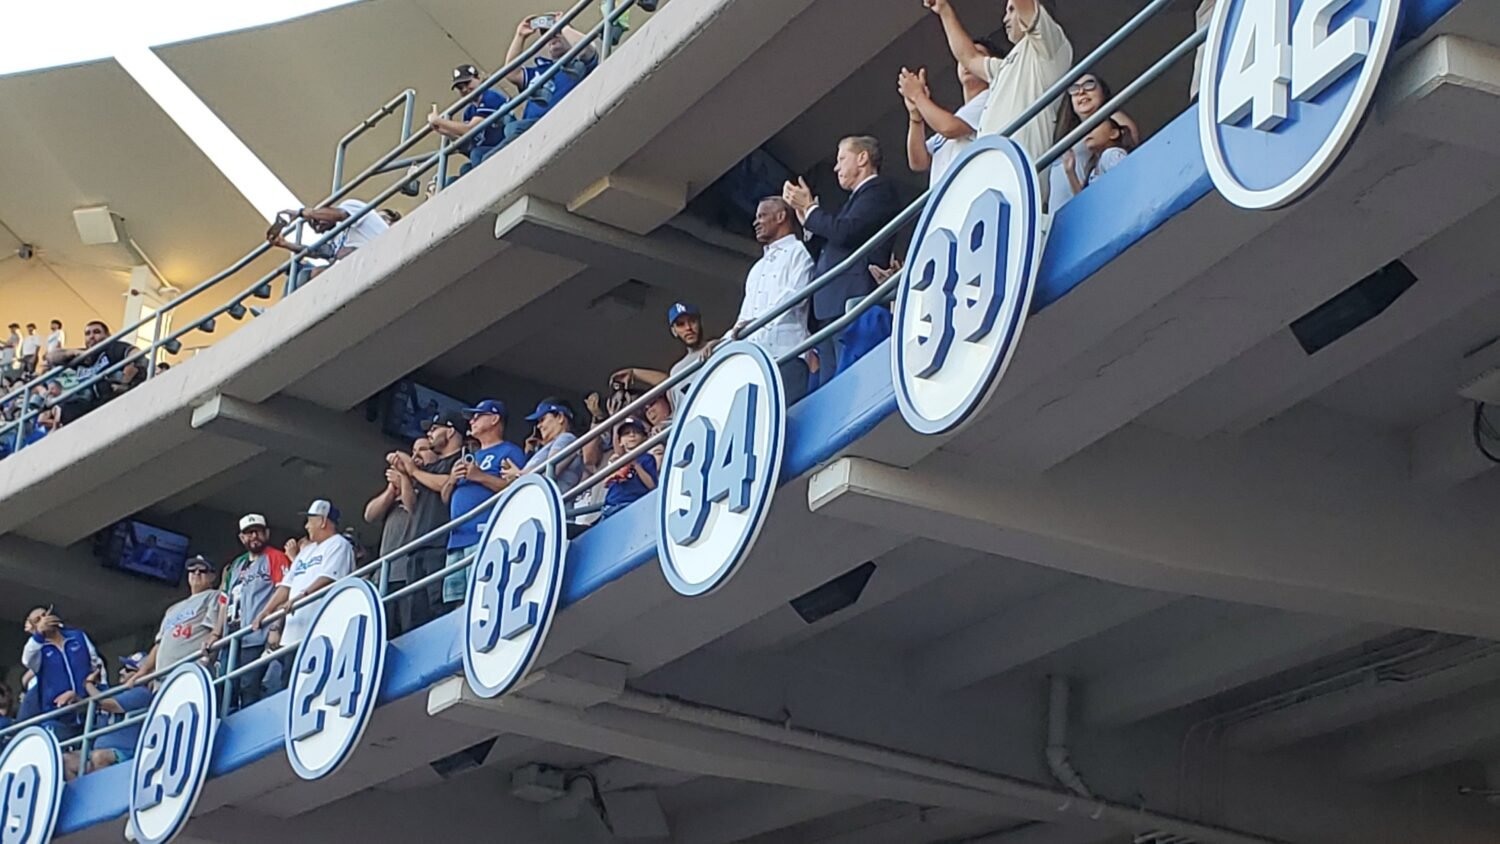 Photos: Dodgers retire pitcher Fernando Valenzuela's number - Los